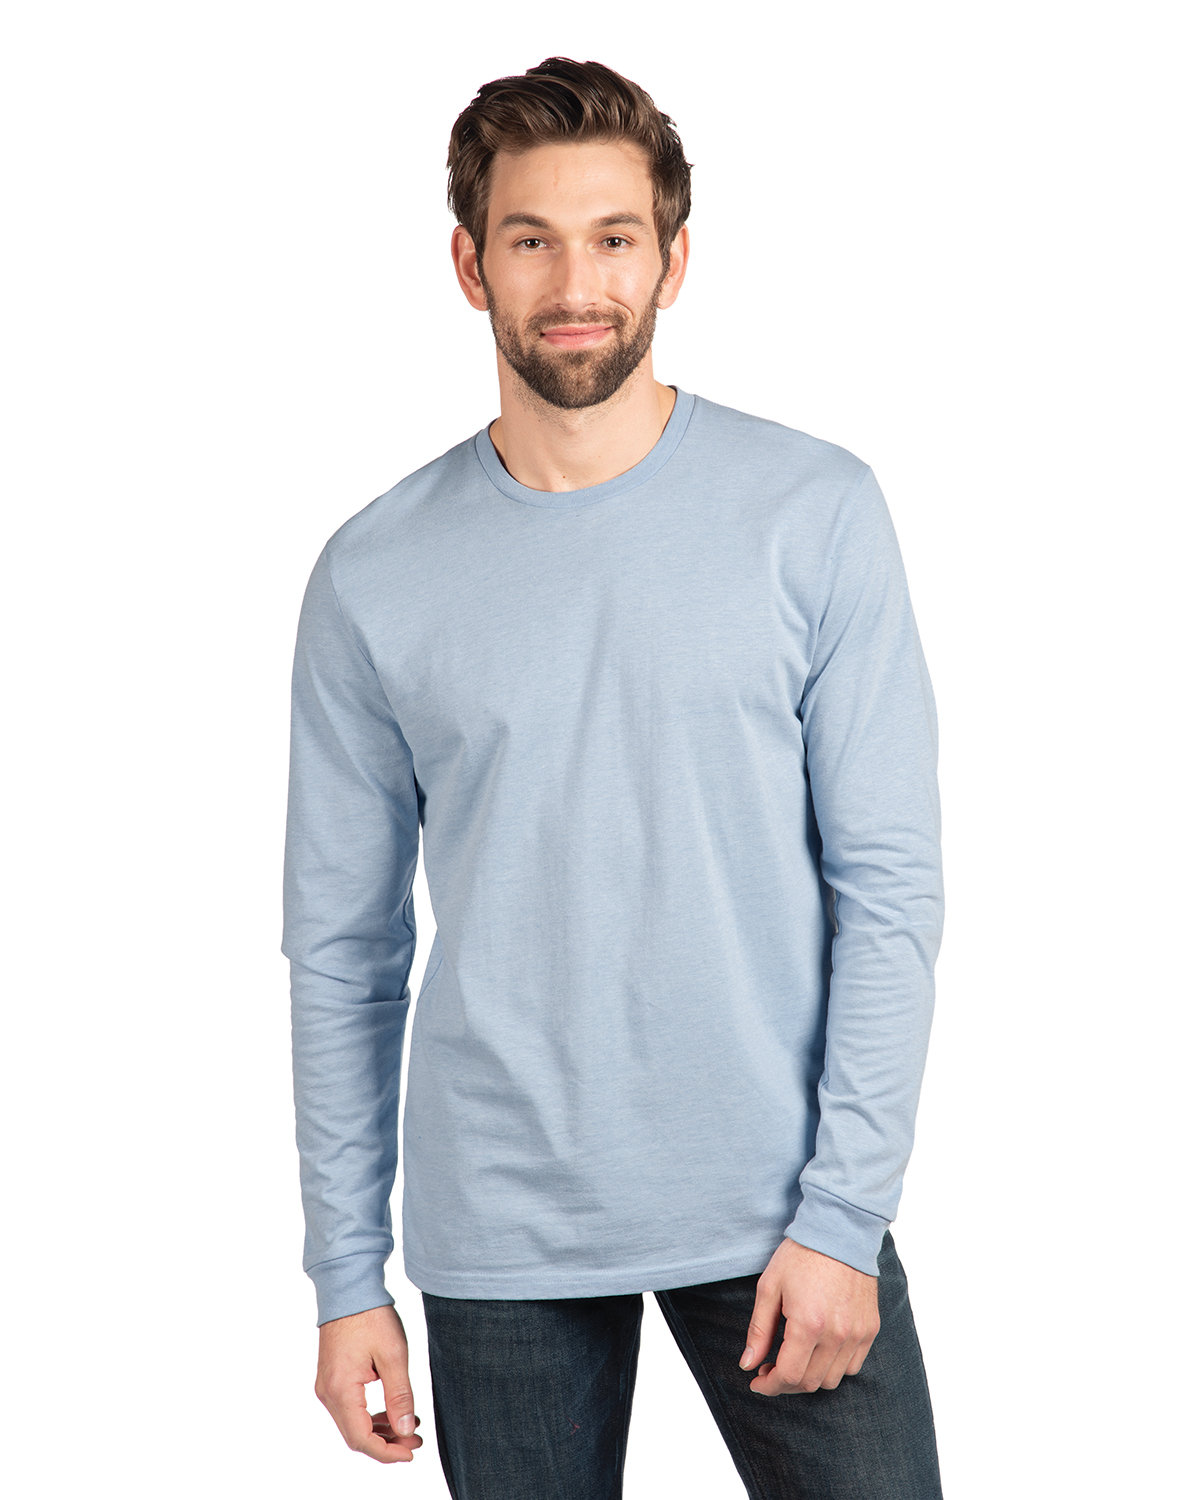 Next Level Apparel Unisex CVC Long-Sleeve T-Shirt HTHR COLUM BLUE 